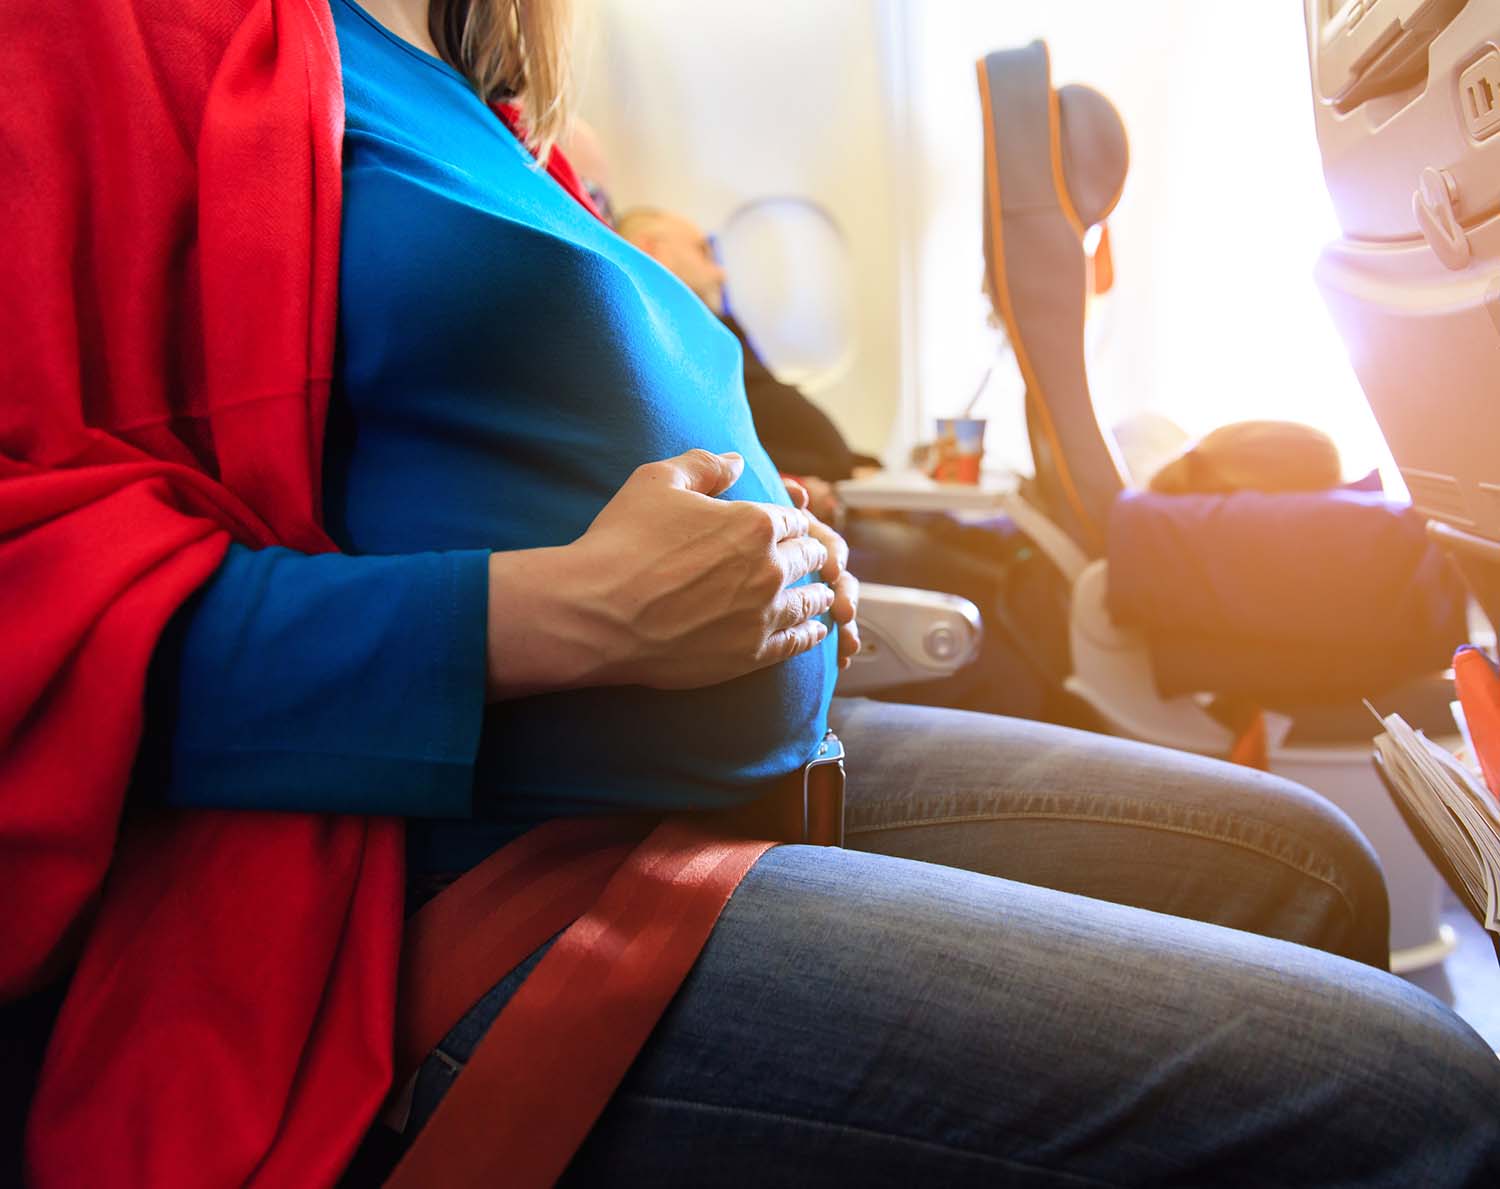 halifax travel insurance pregnancy